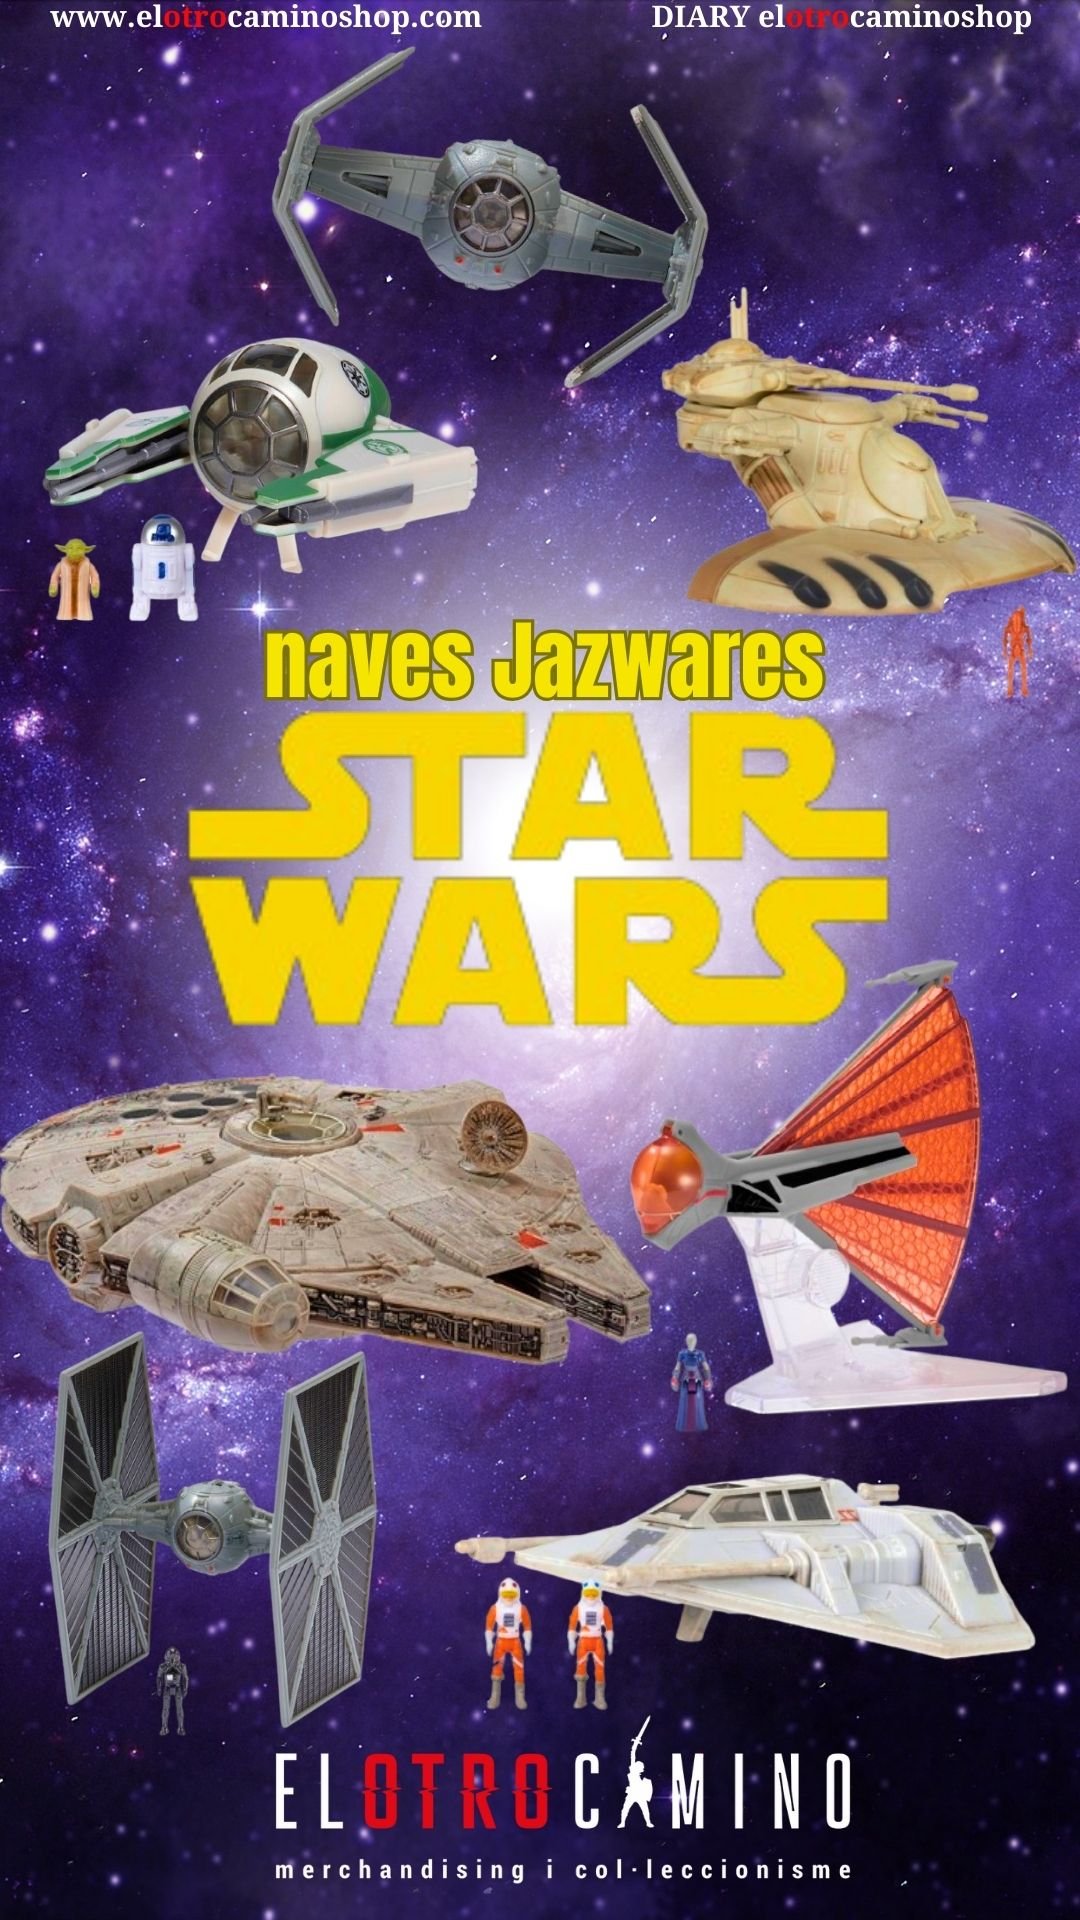 naves star wars jazwares